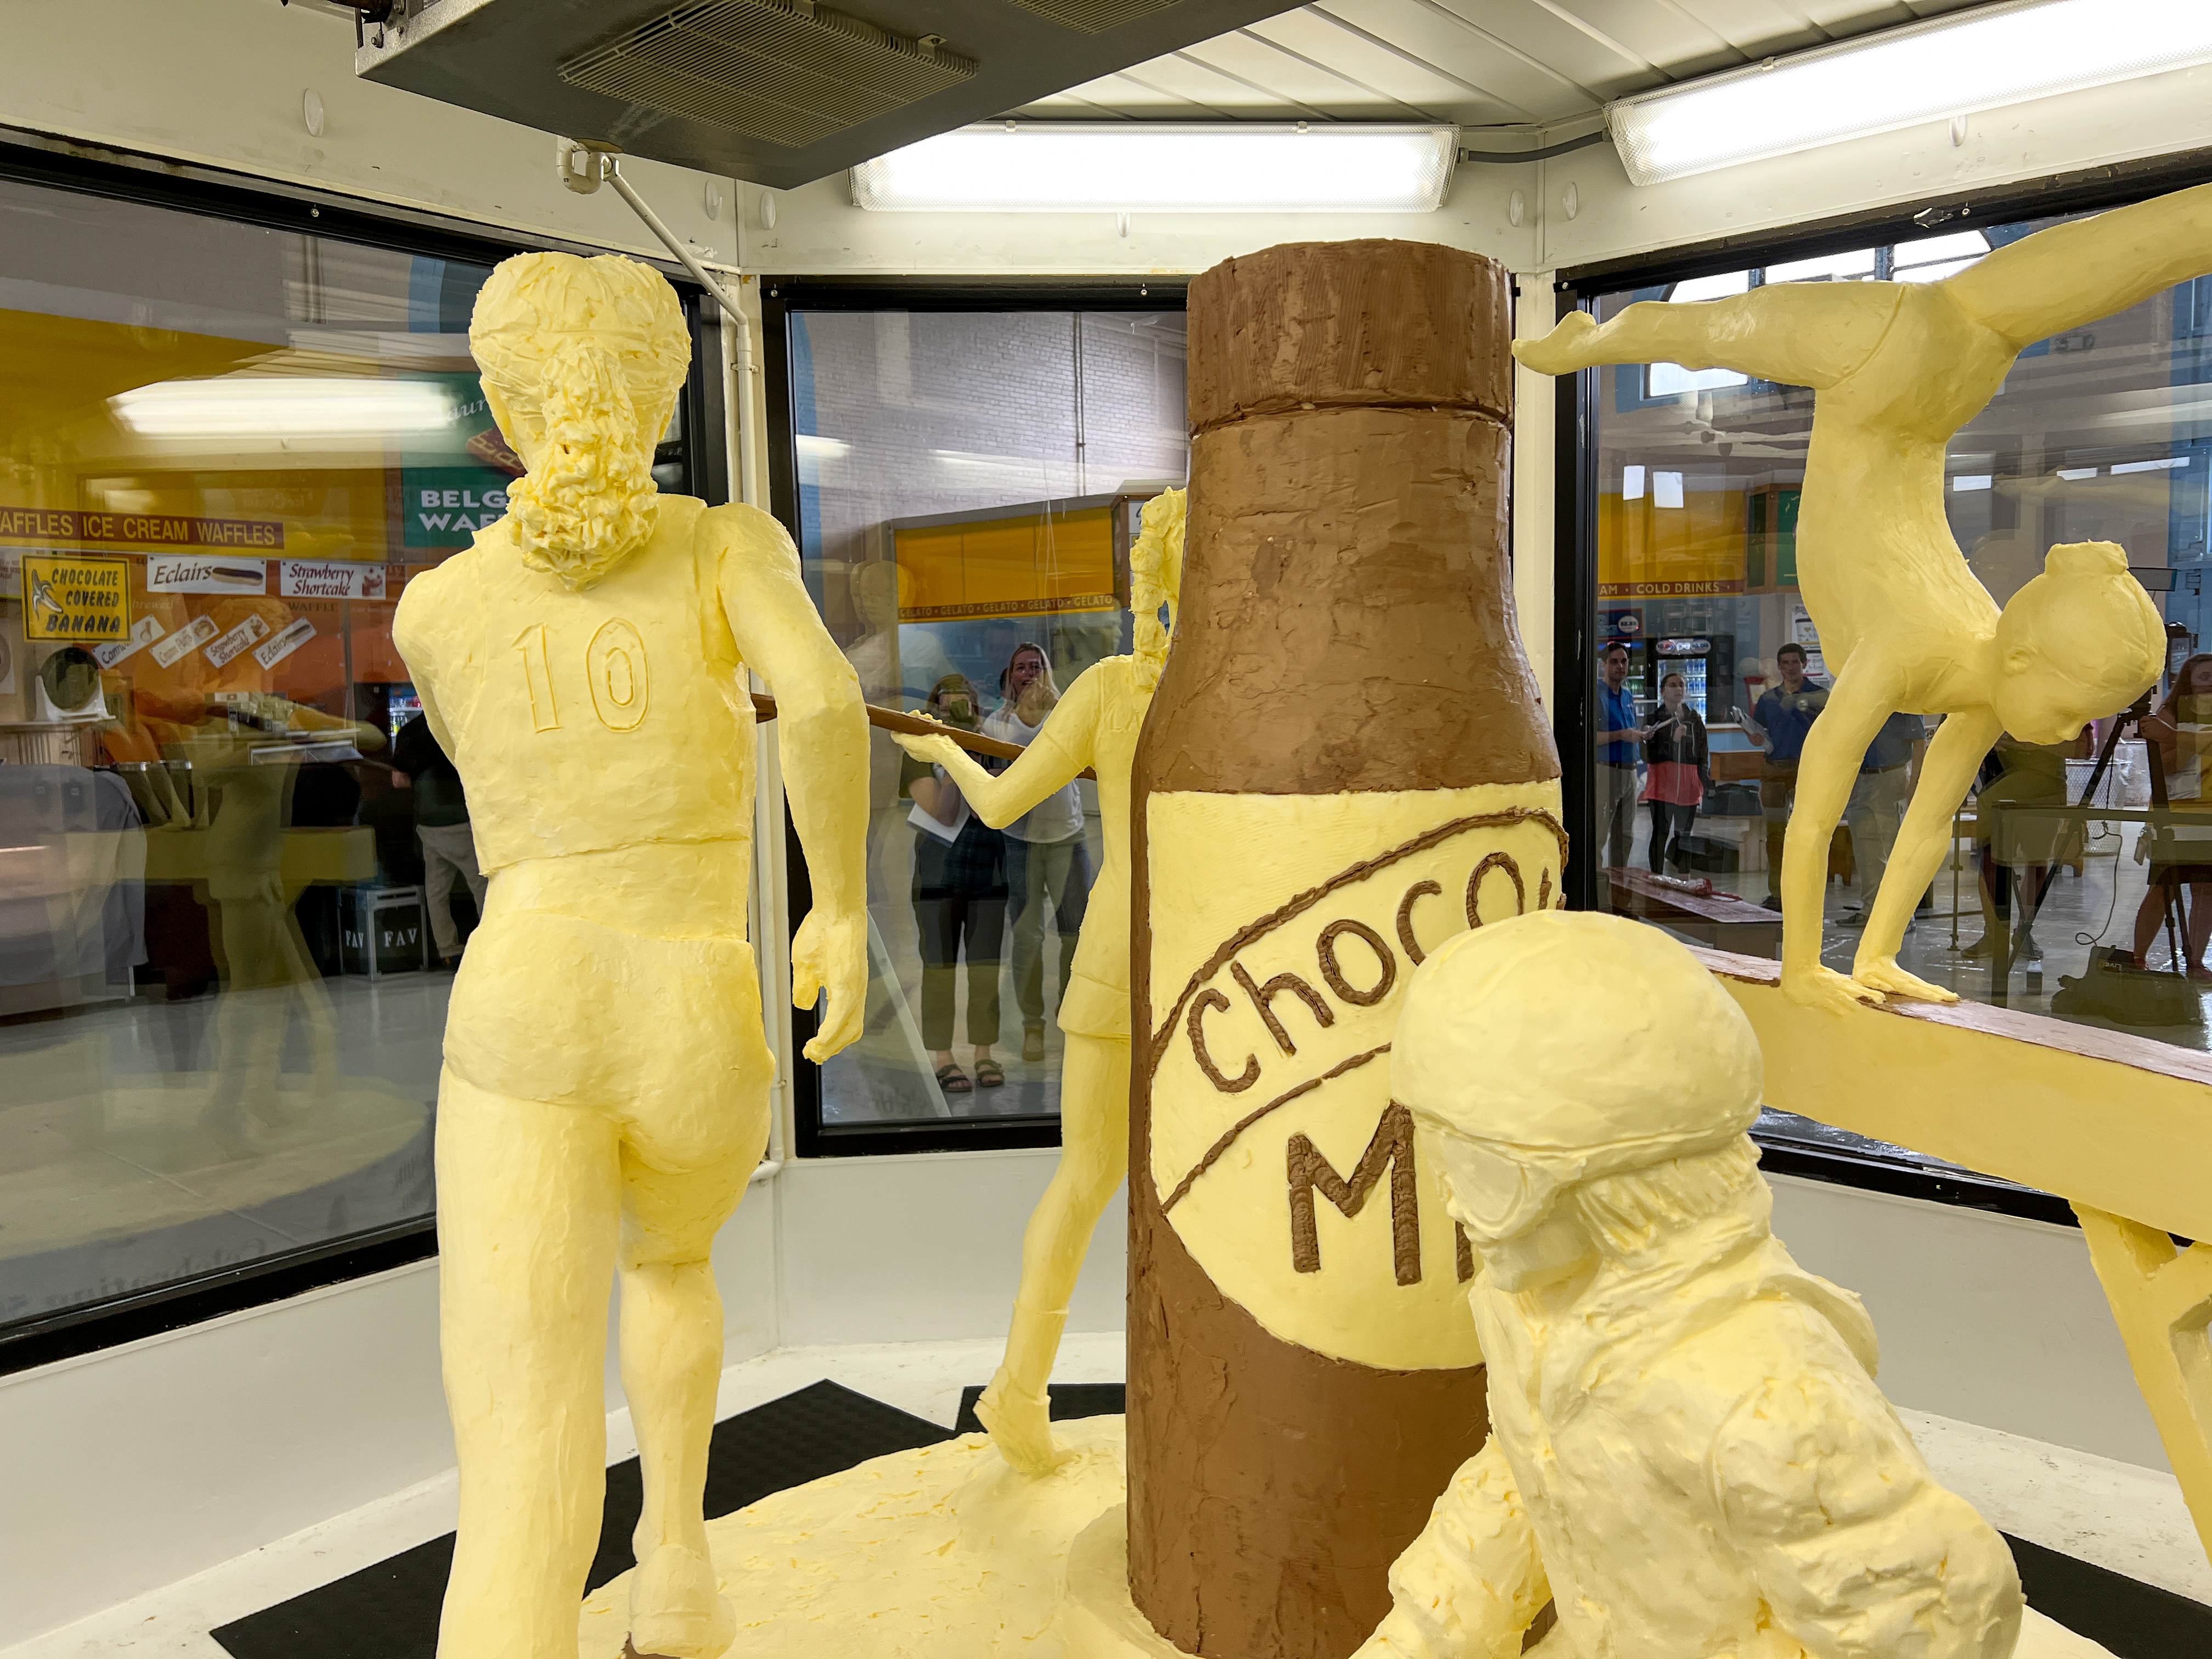 Spoiler Alert: NY State Fair 2022 butter sculpture revealed